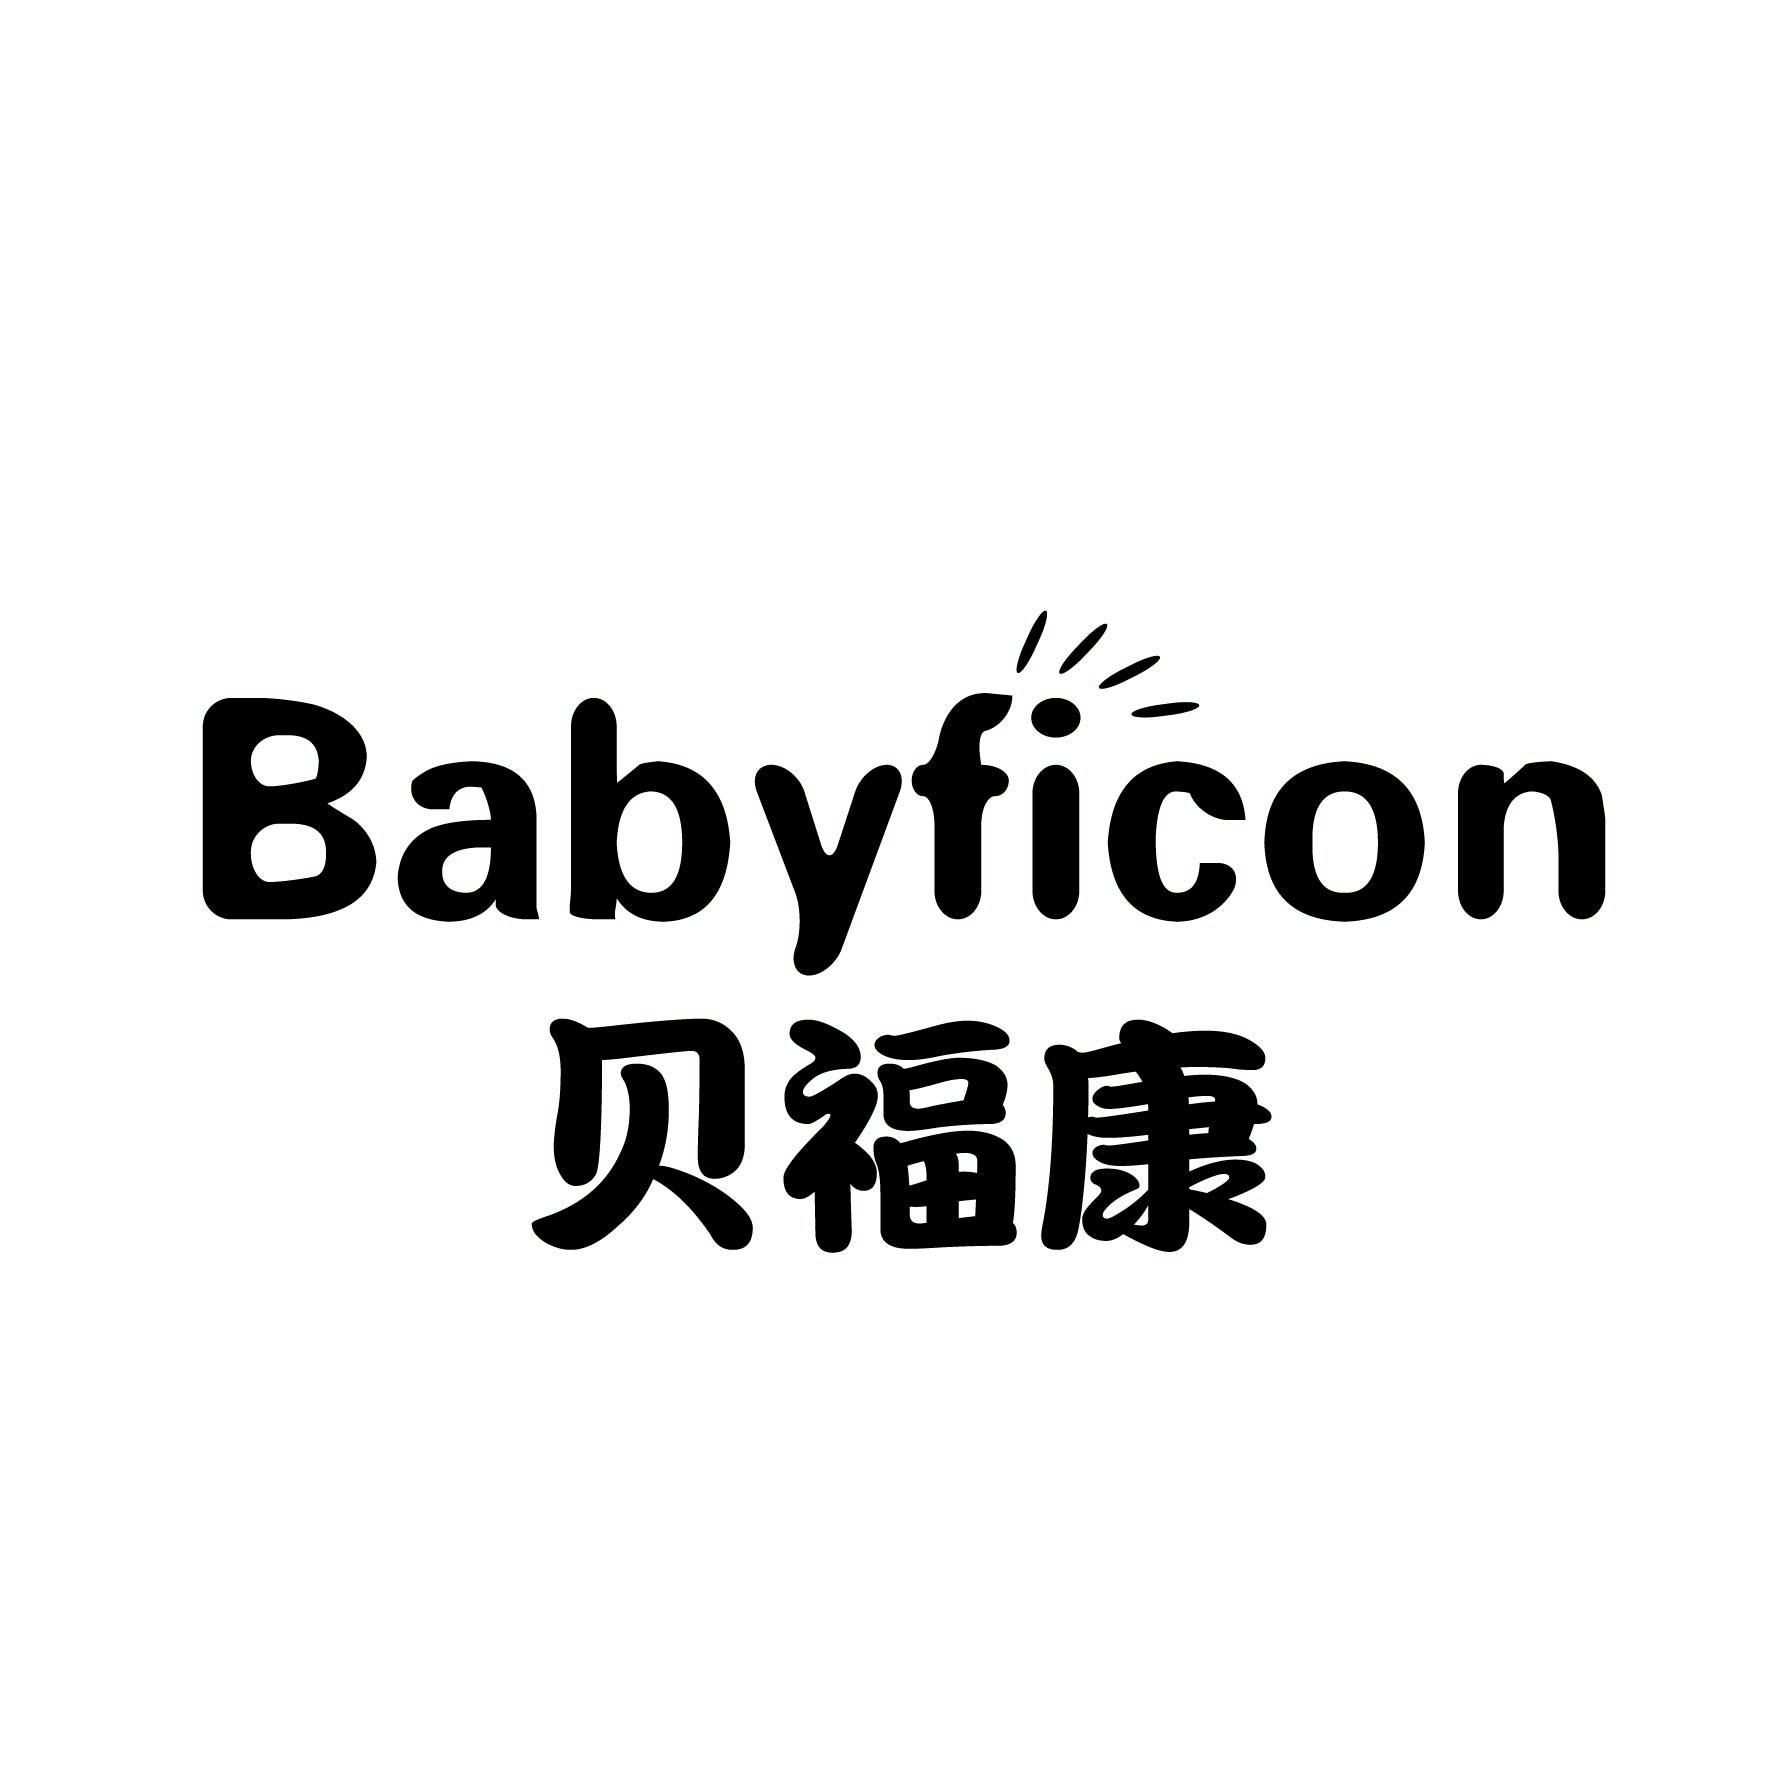  BABYFICON